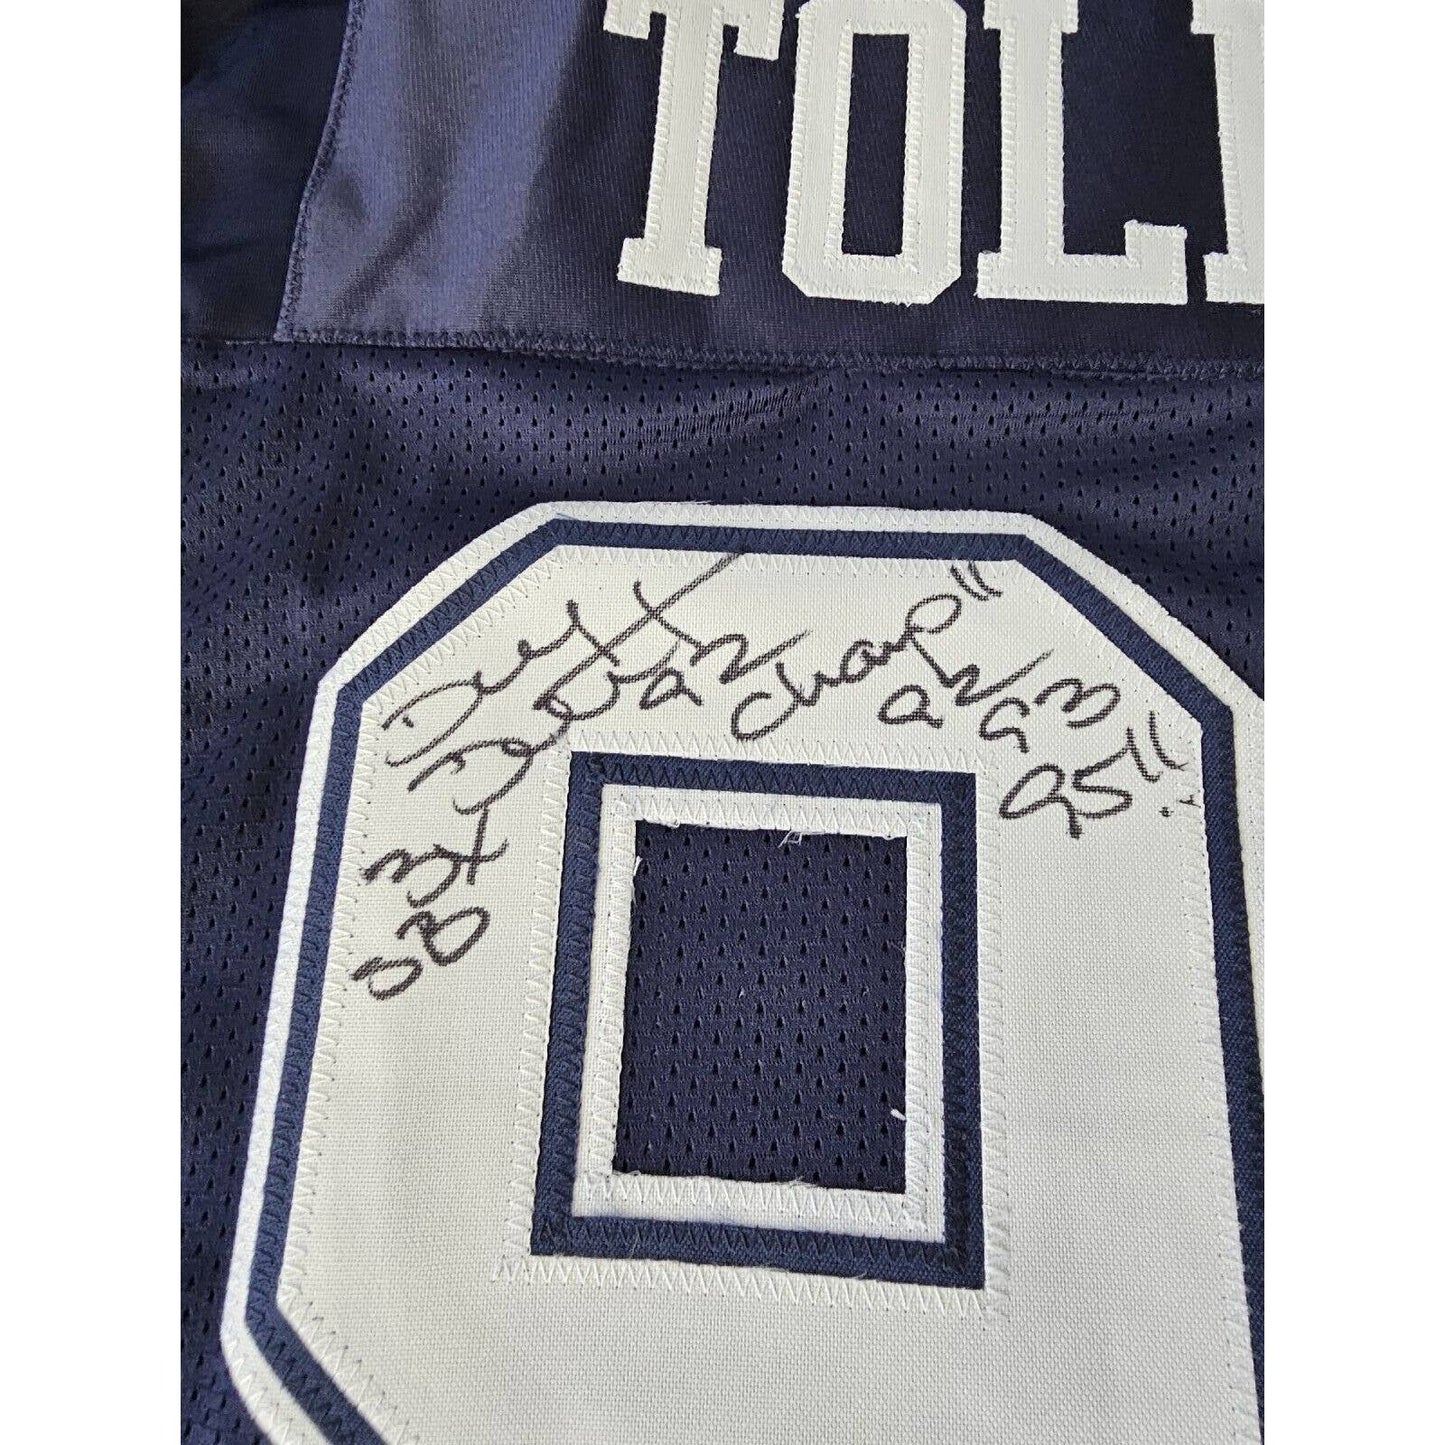 Tony Tolbert Autographed/Signed Jersey JSA COA Dallas Cowboys 3X SB Champ